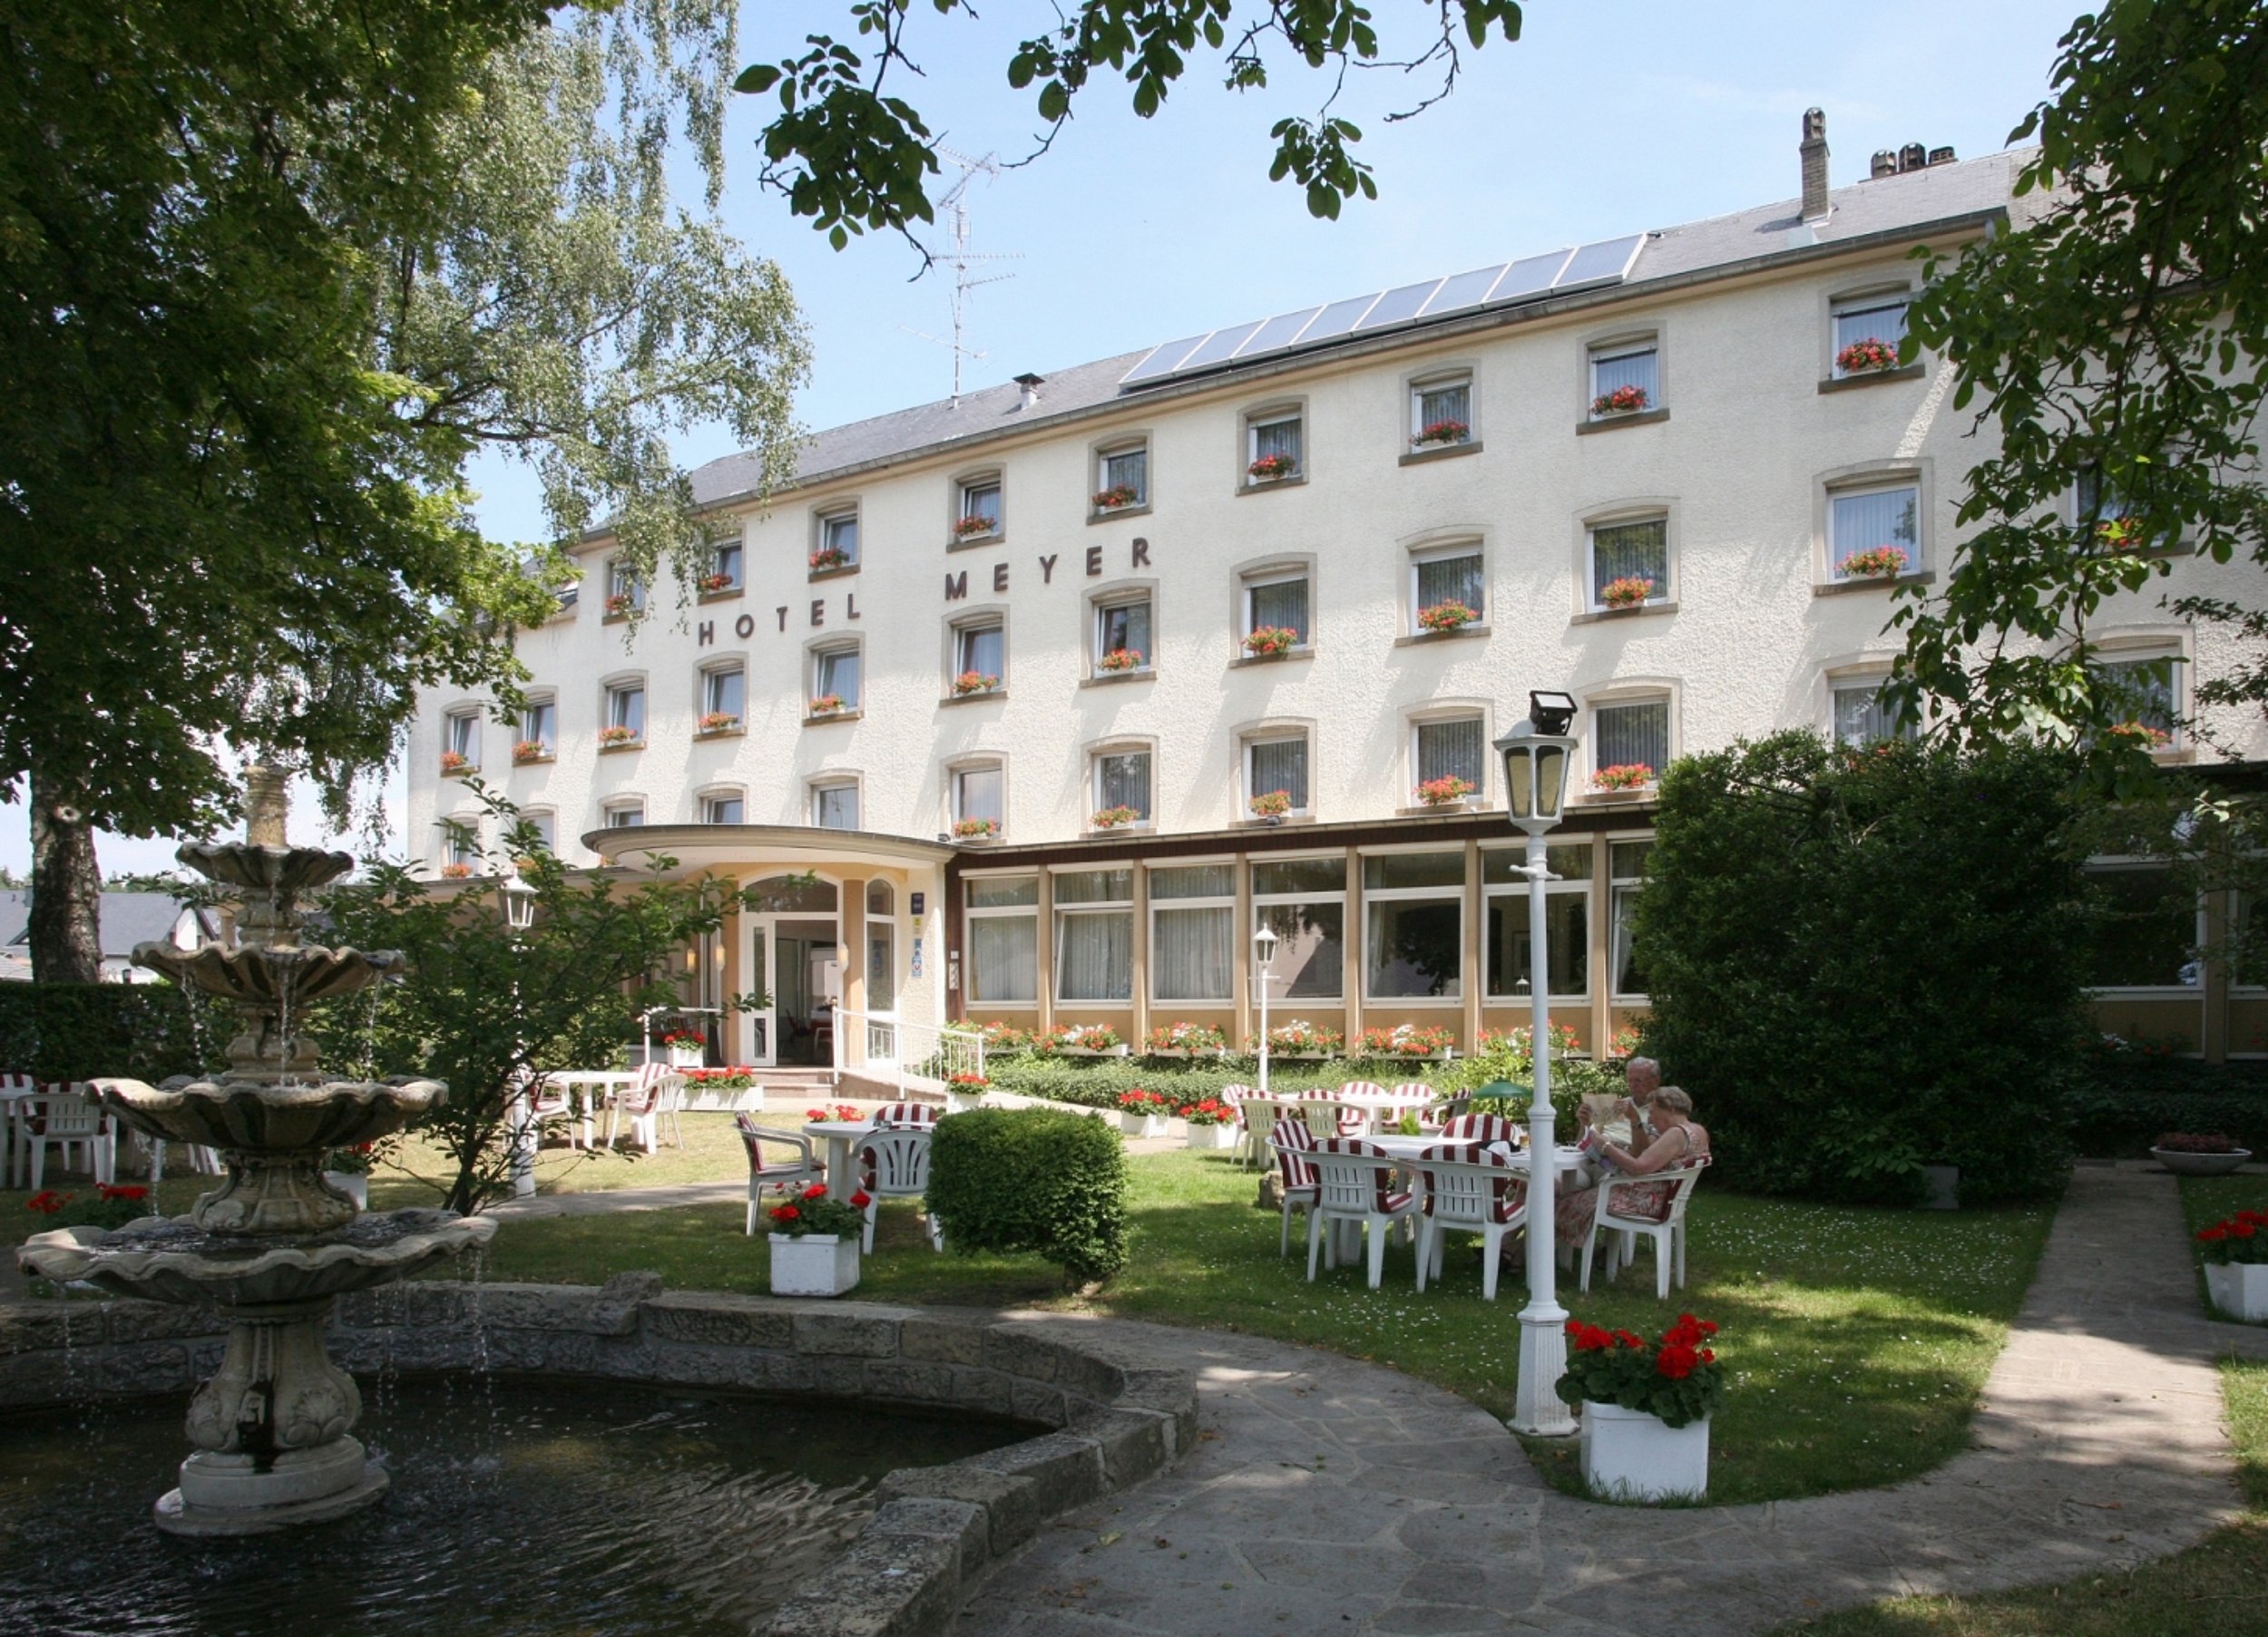 Restaurant Hotel Meyer